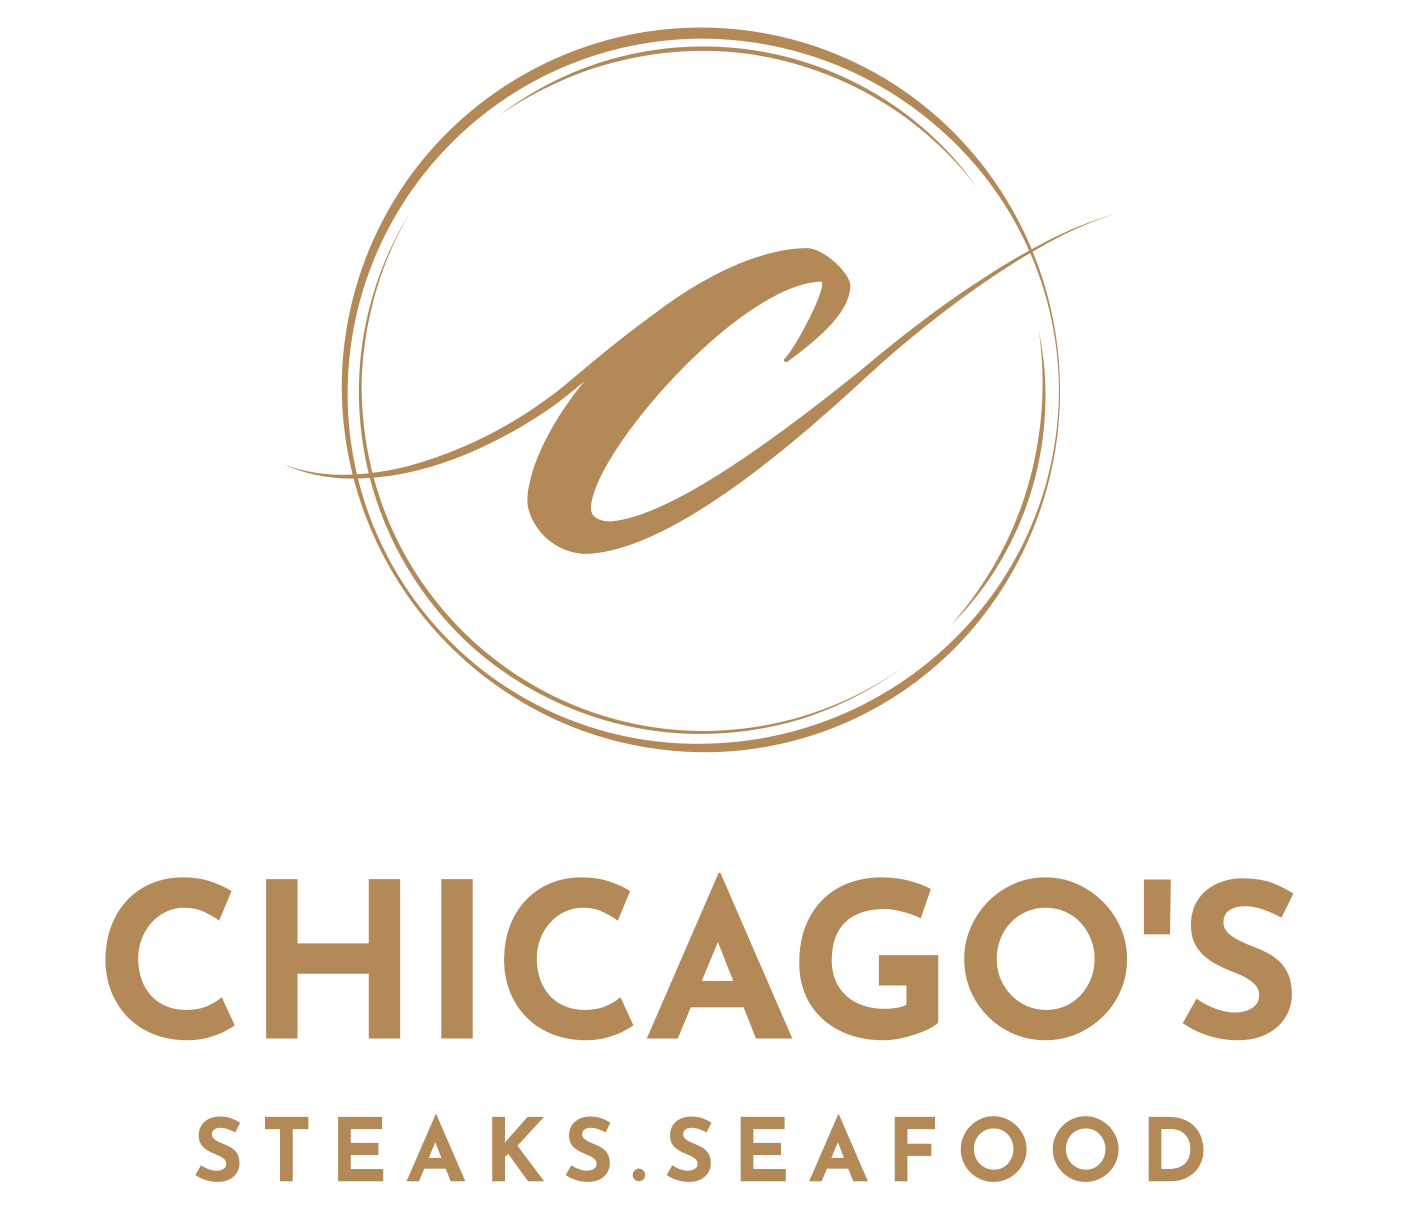 Chicago's logo scroll